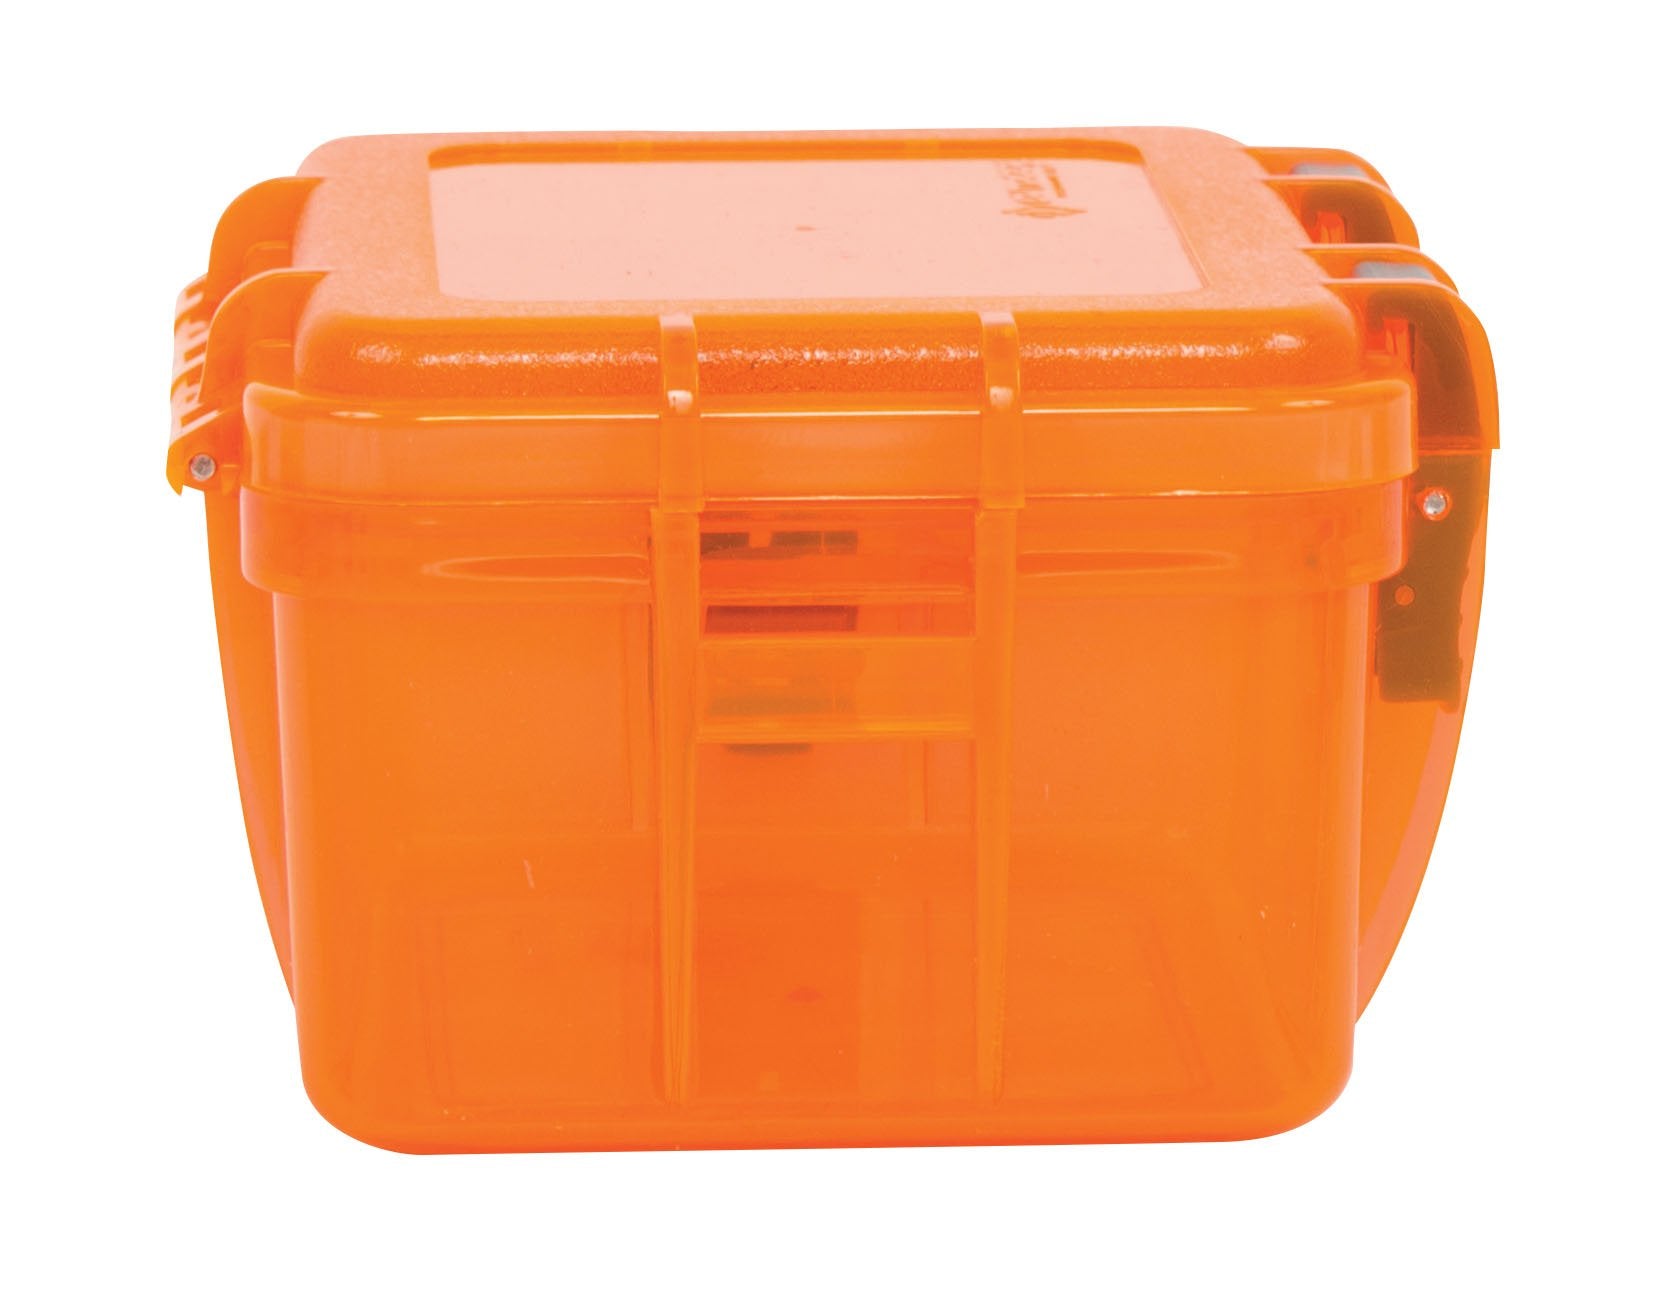 1/10 Storage Box Container Water Proof Low Profile ORANGE